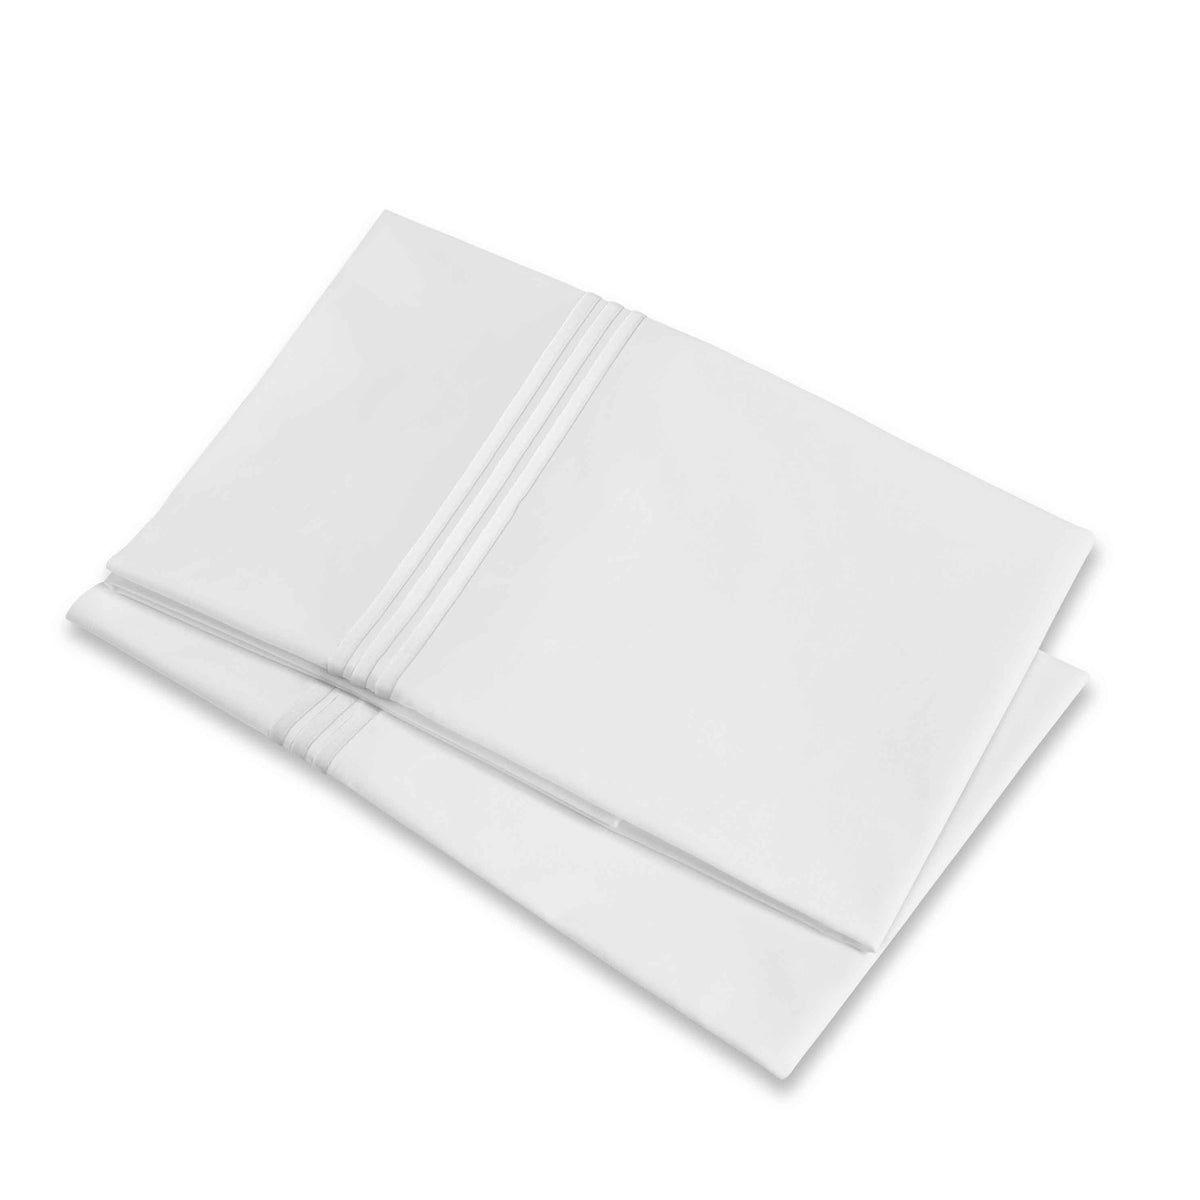 Folded Pillowcases of Signoria Platinum Percale Bedding in White/White Color